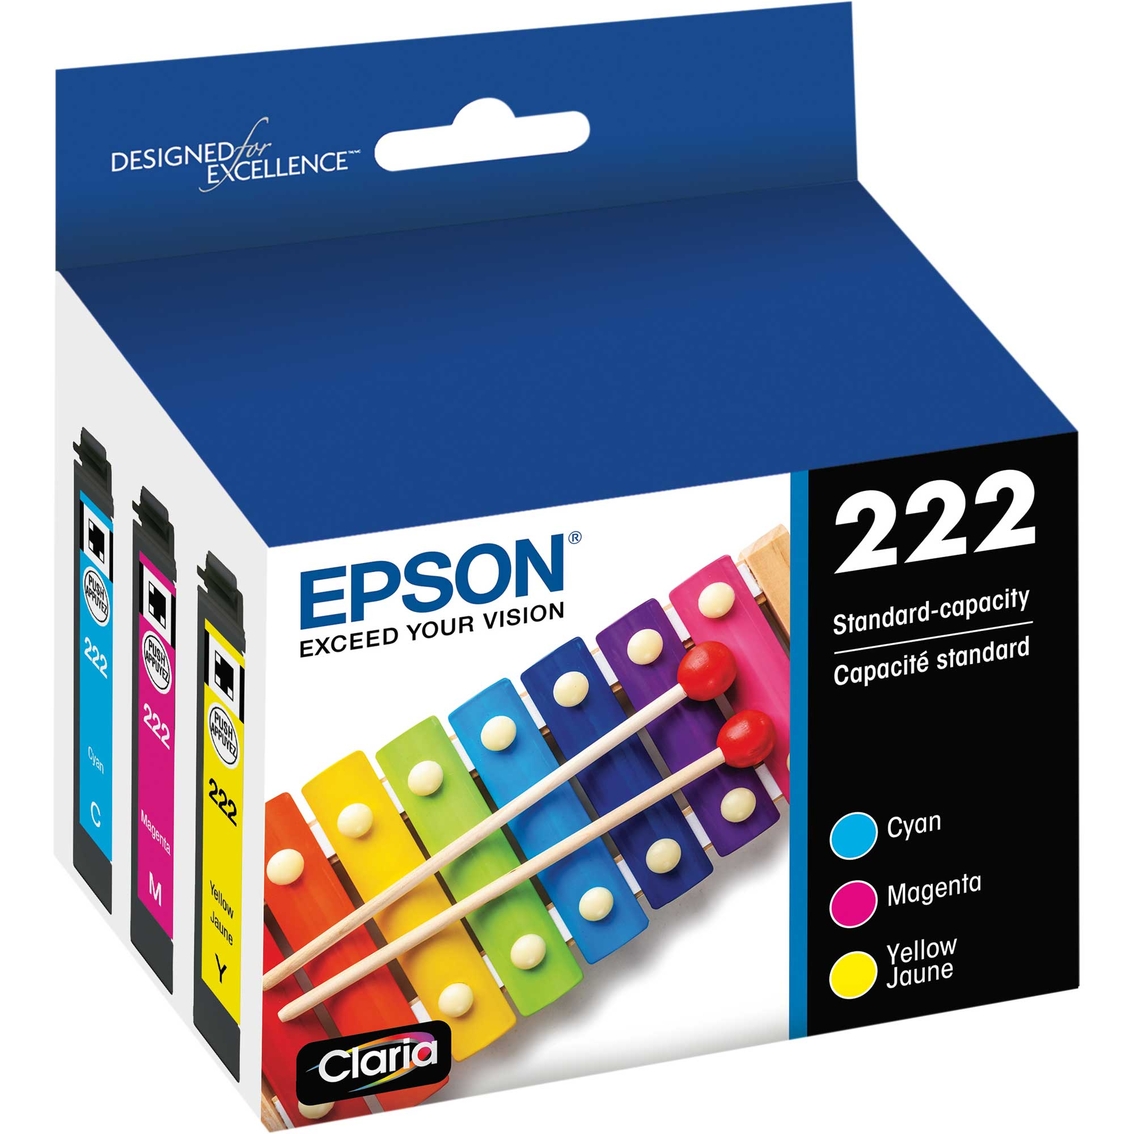 Epson T222 Color Multi Pack Ink Cartridge Standard Capacity - Image 2 of 2